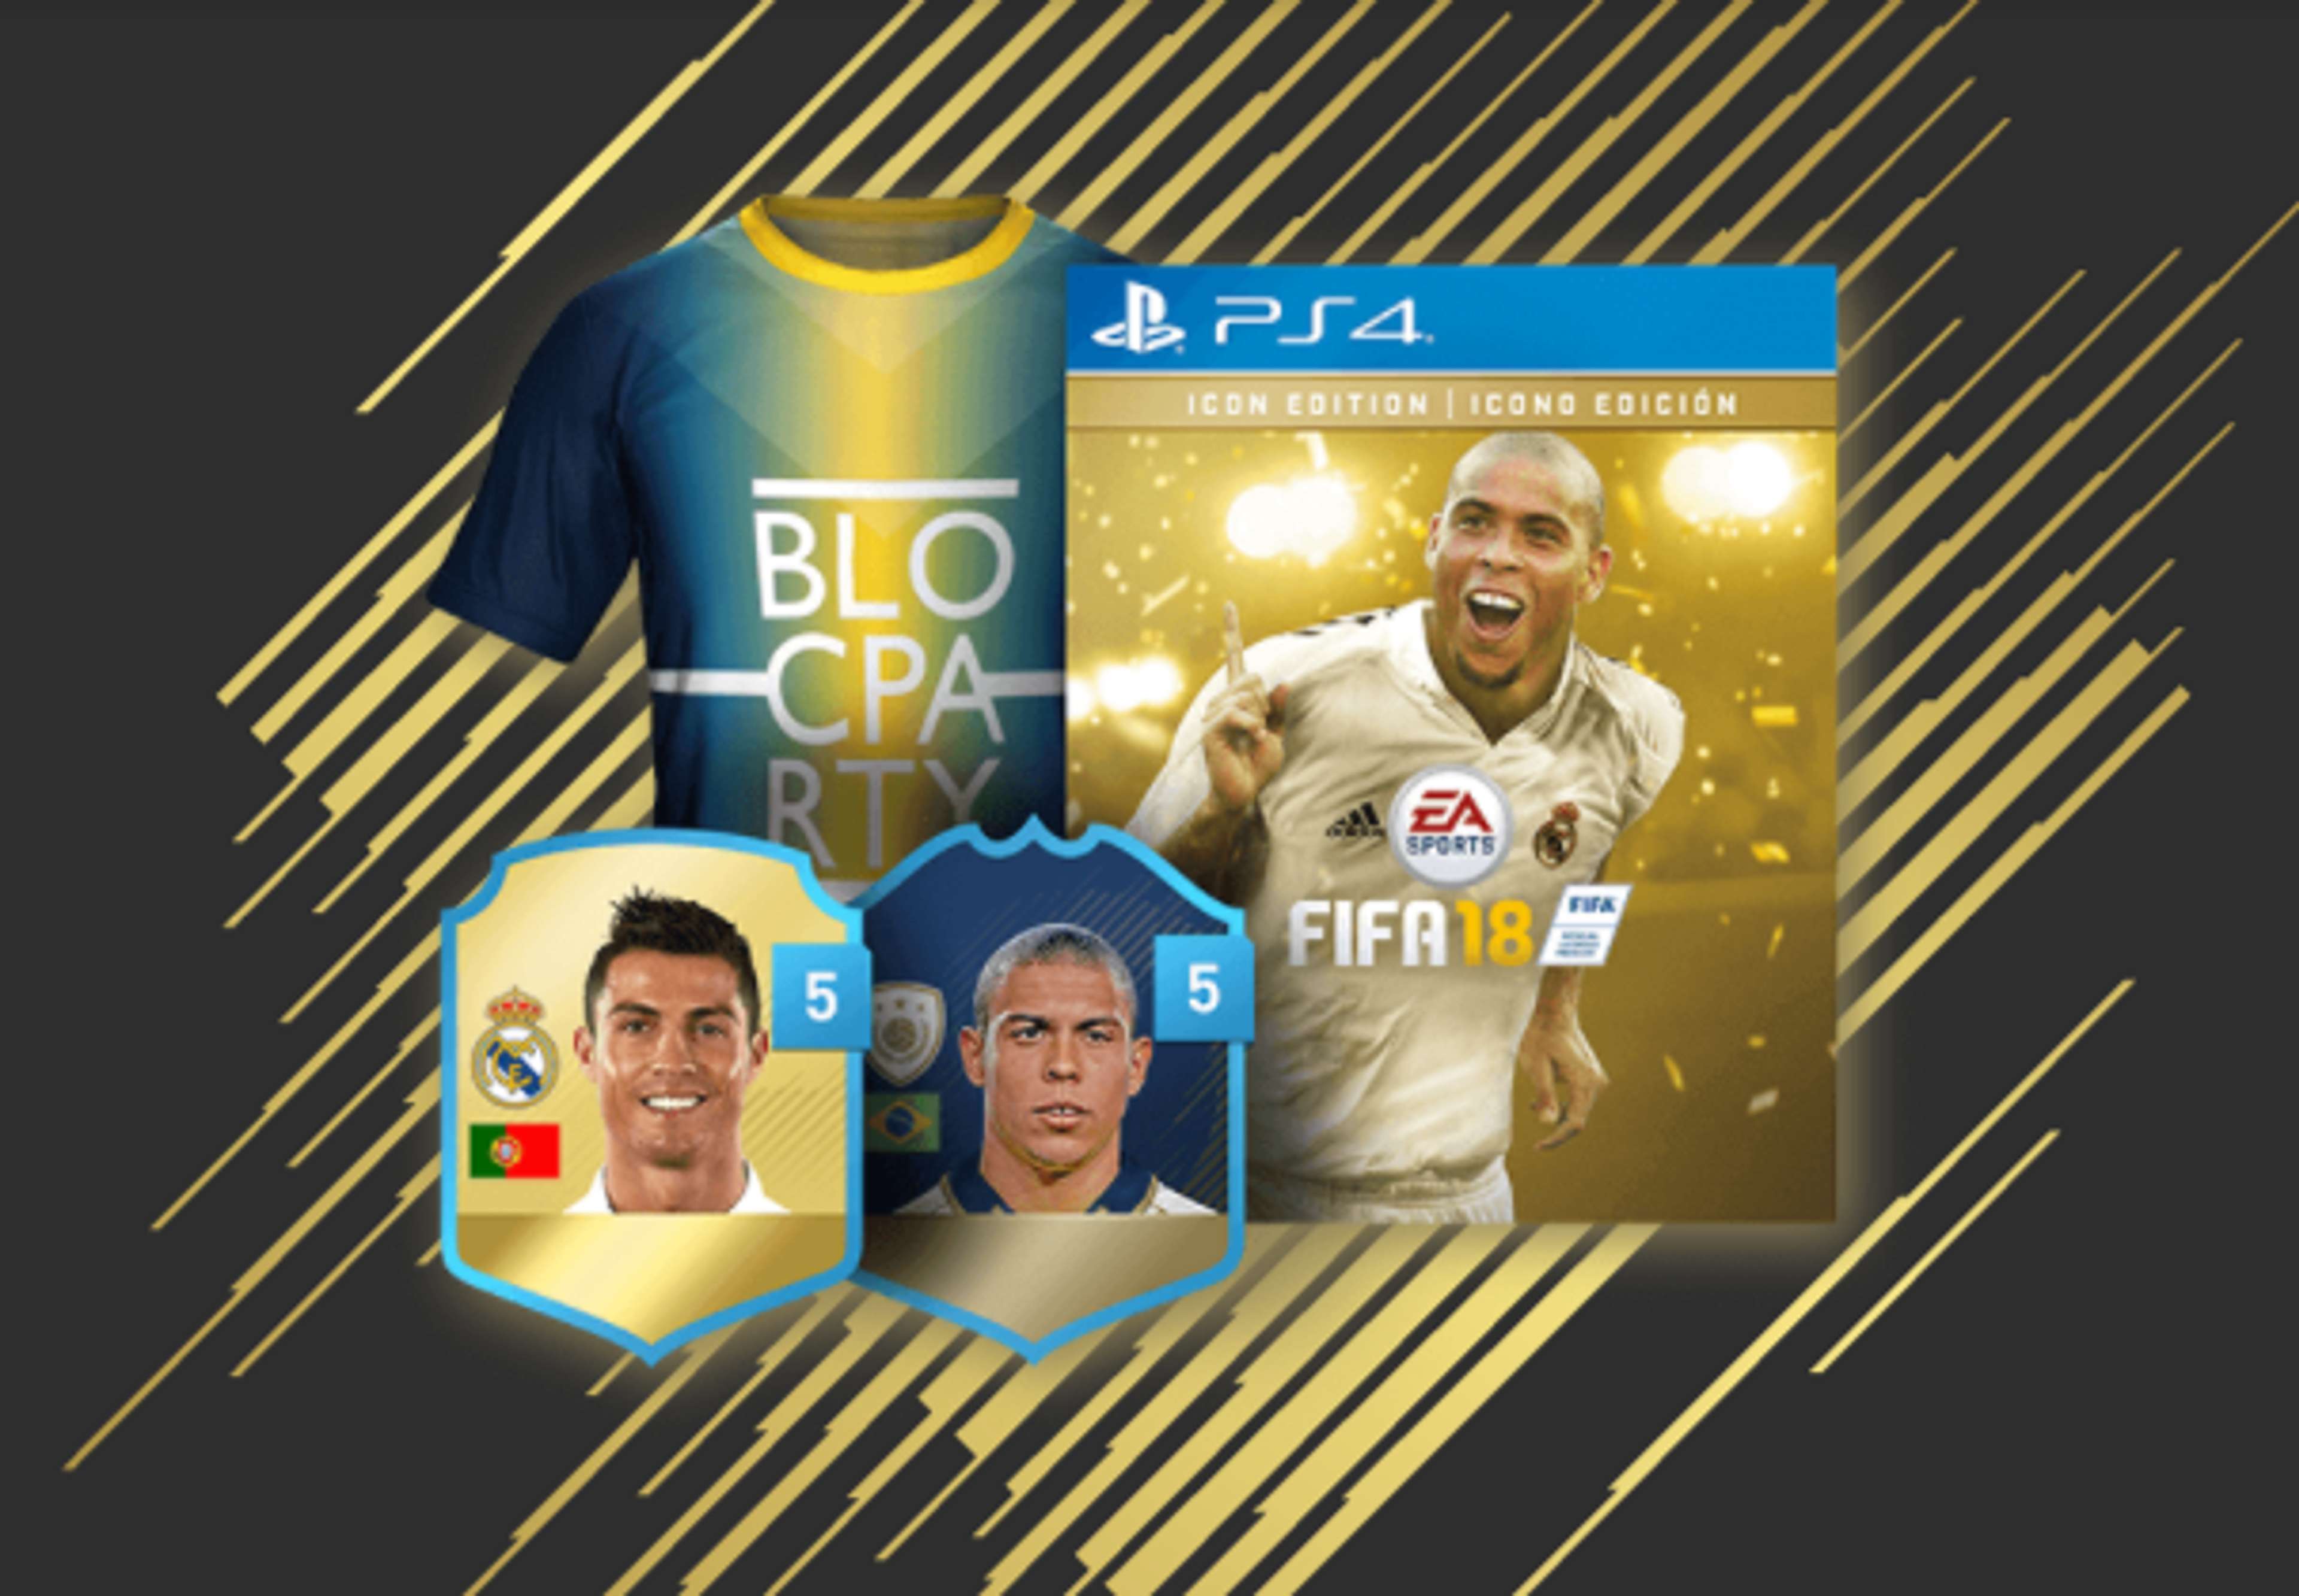 Icone FIFA 18